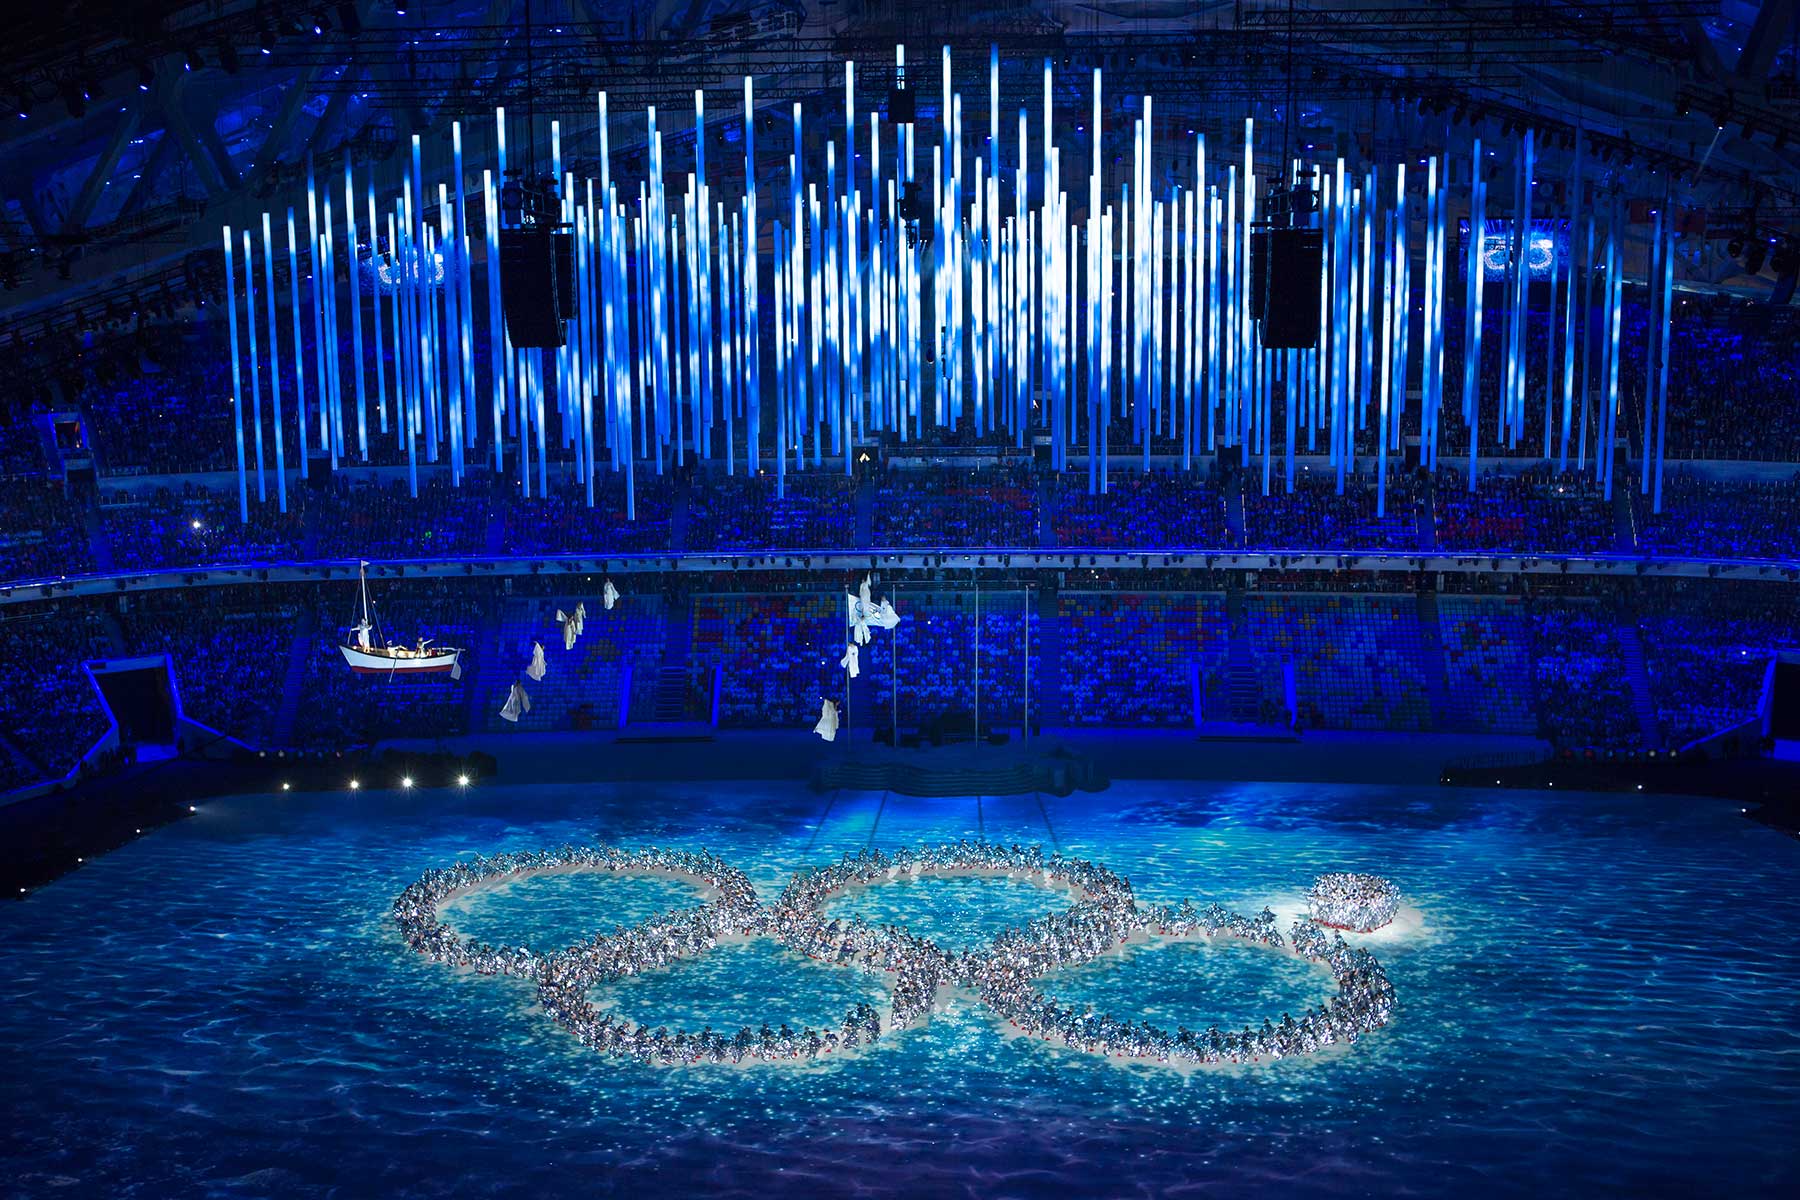 Sochi 2014 Closing Ceremony